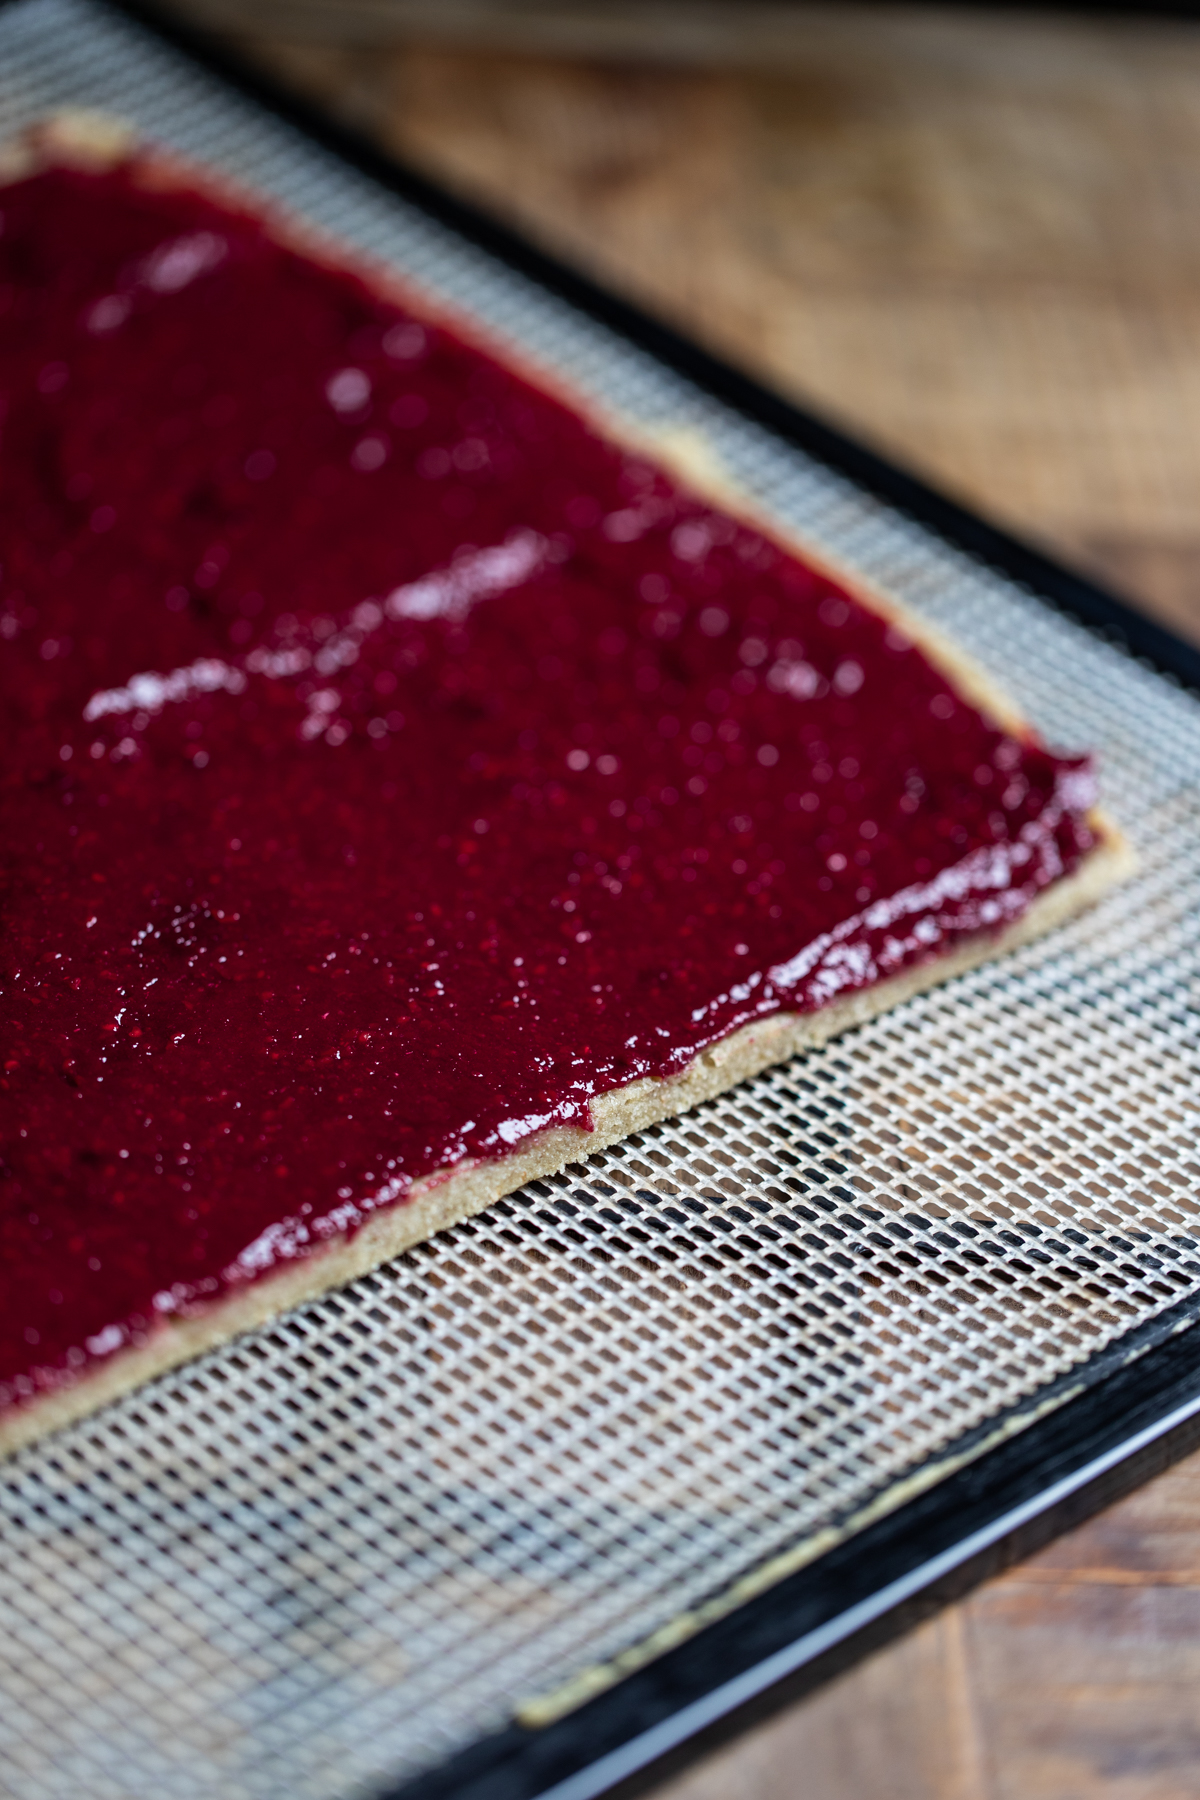 Raspberry jam spread evenly on swiss roll pastry 